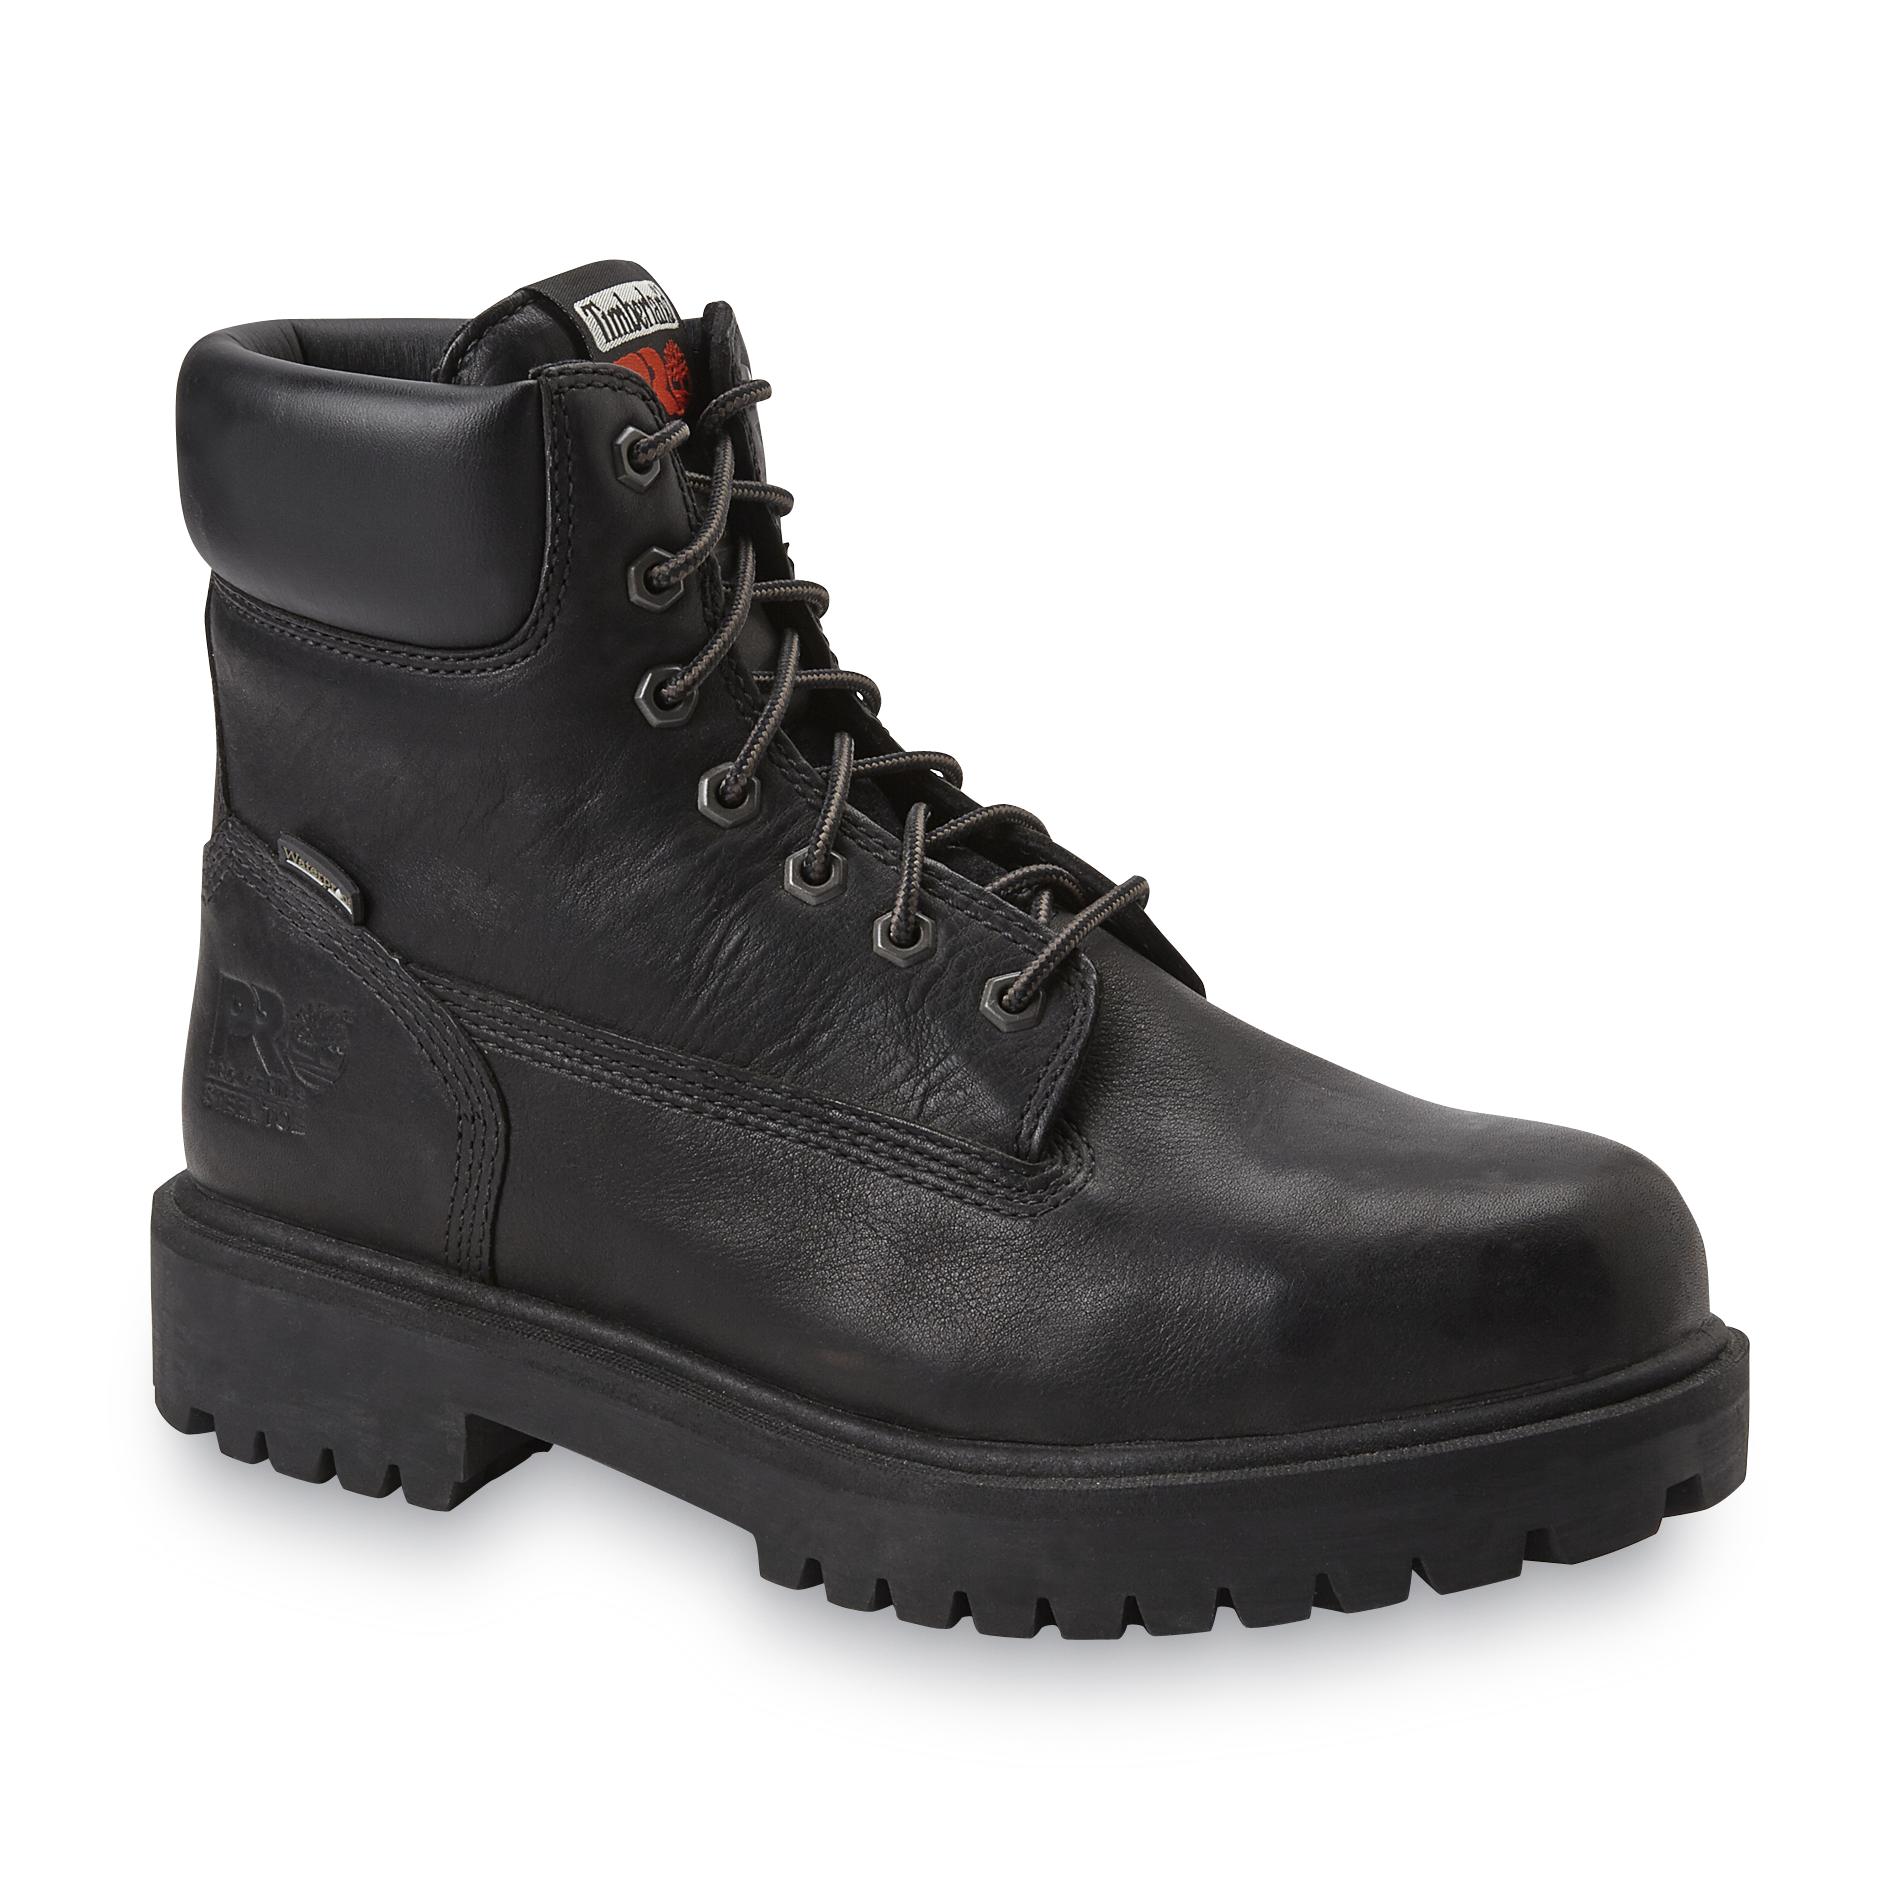 Black Work Boots For Men 5WUxsC1Z